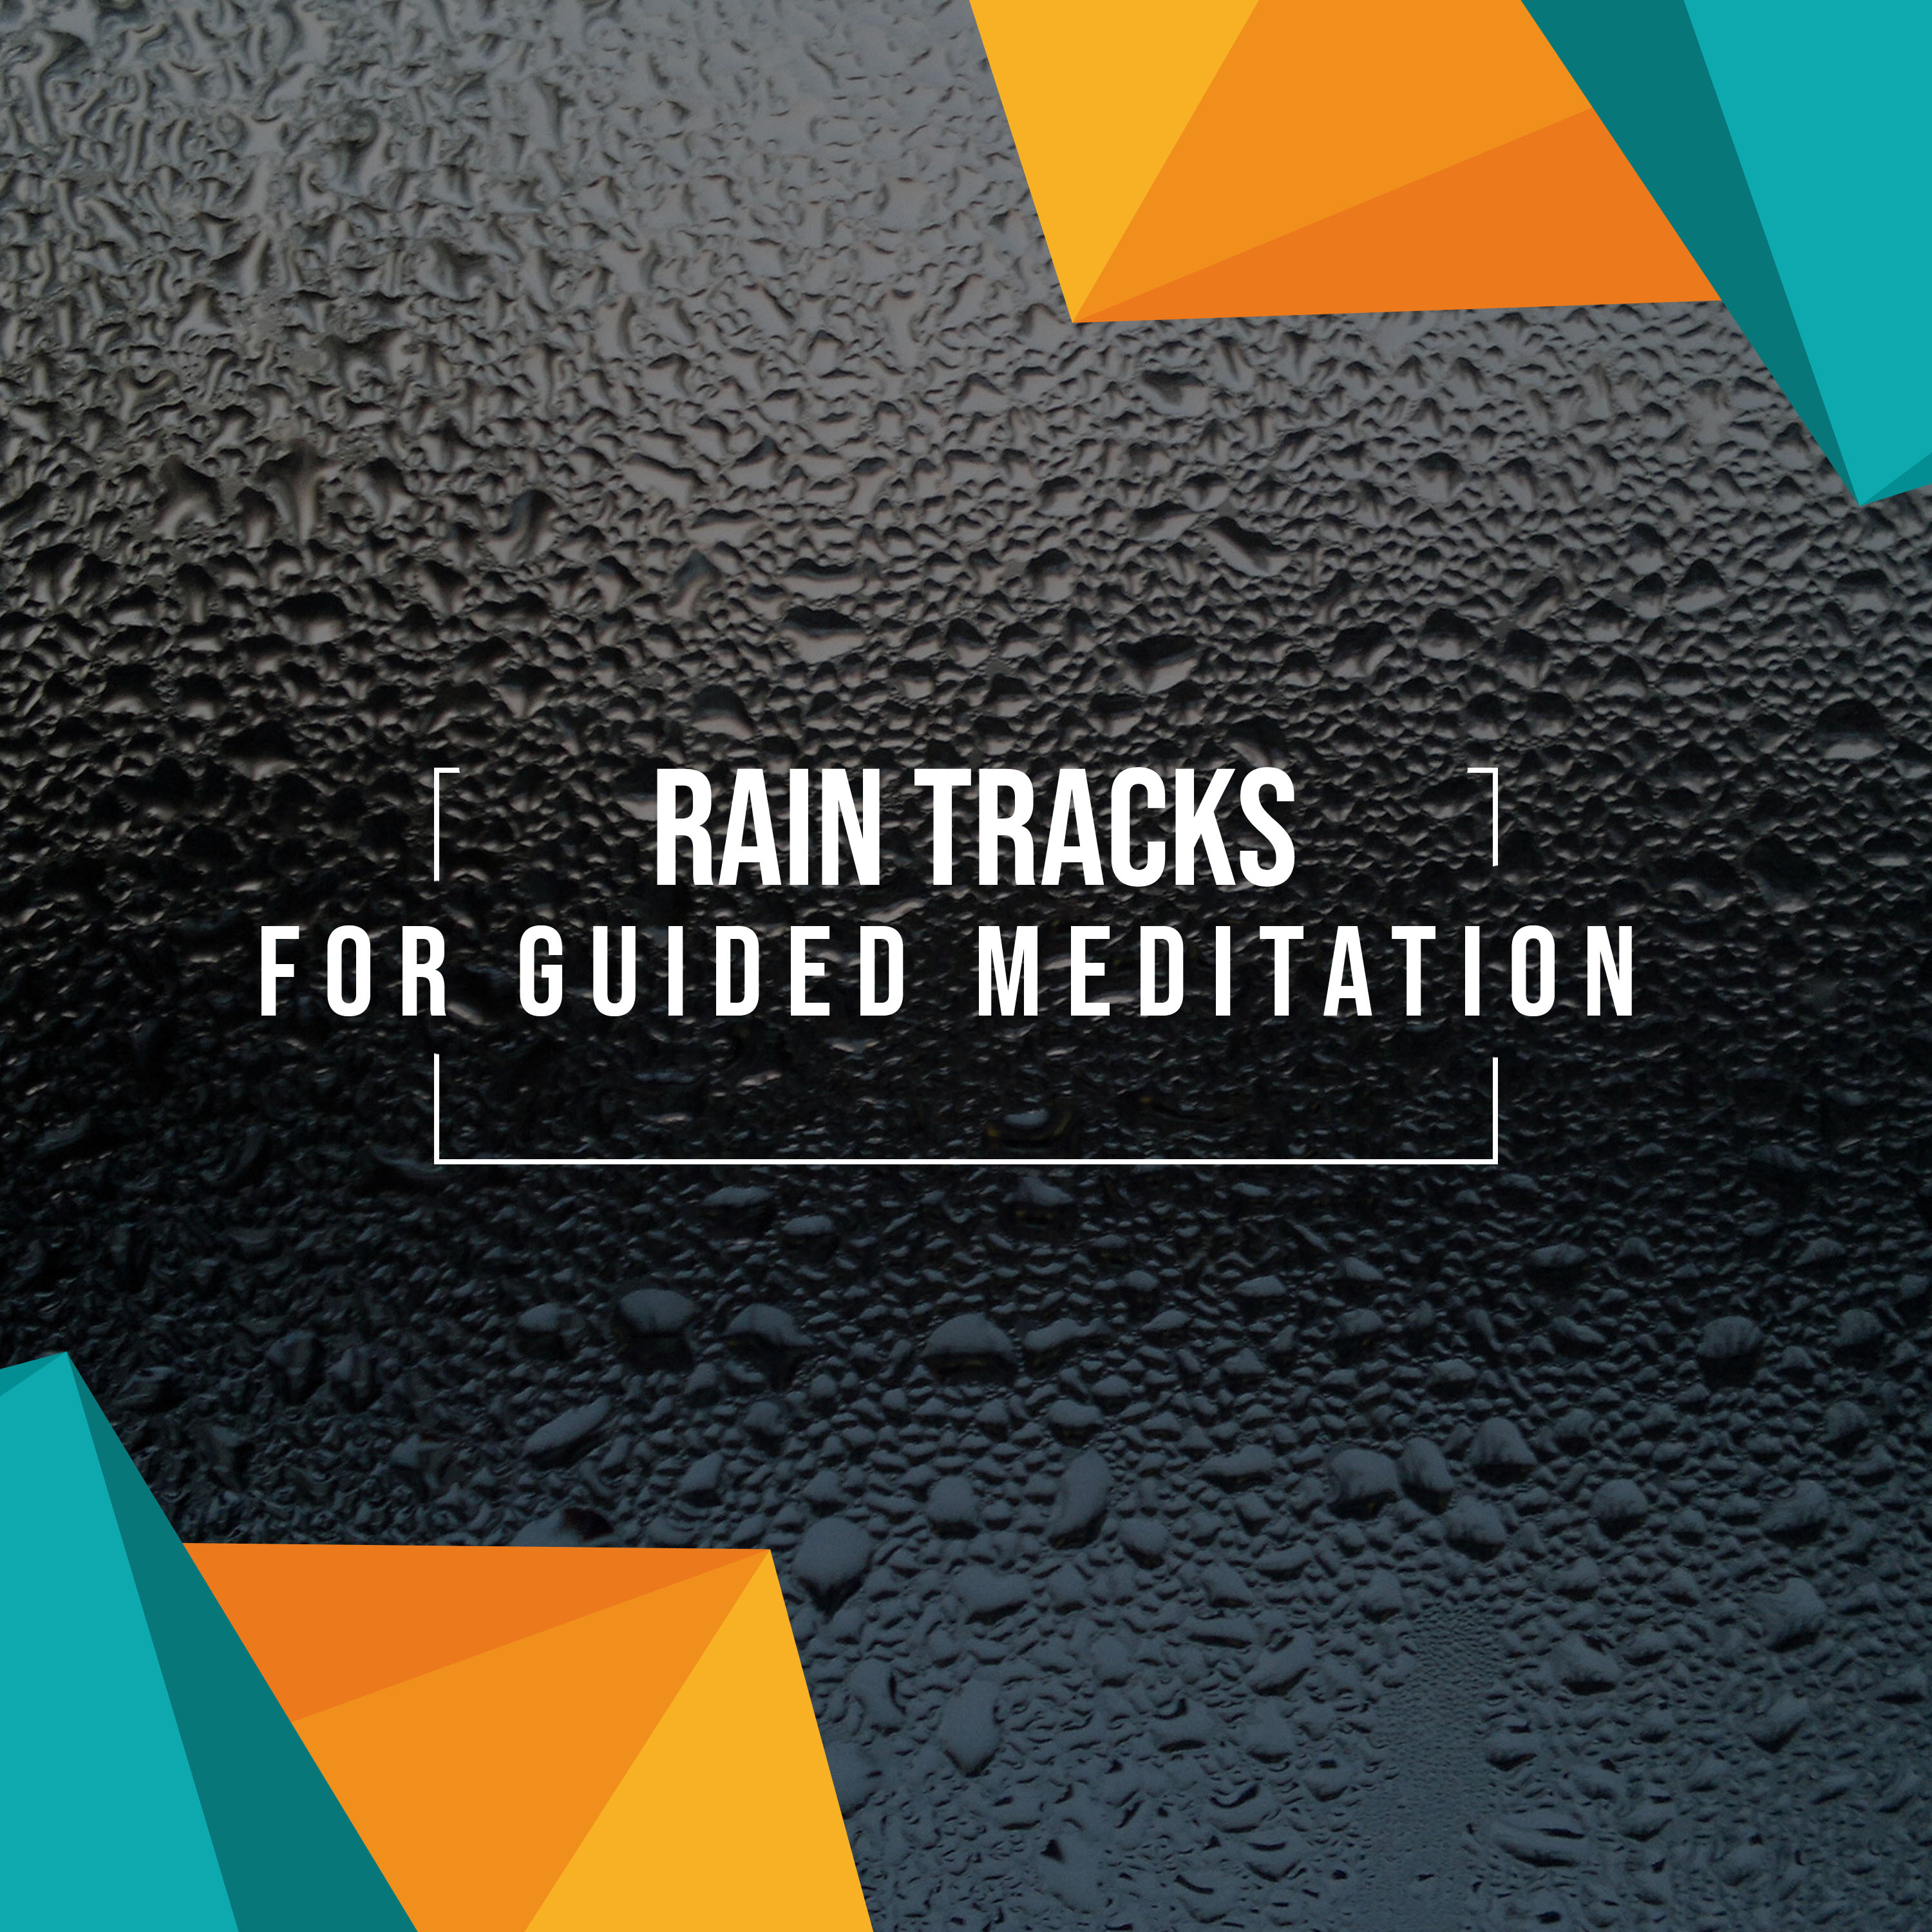 #20 Rolling Rain Tracks to Relieve Stress